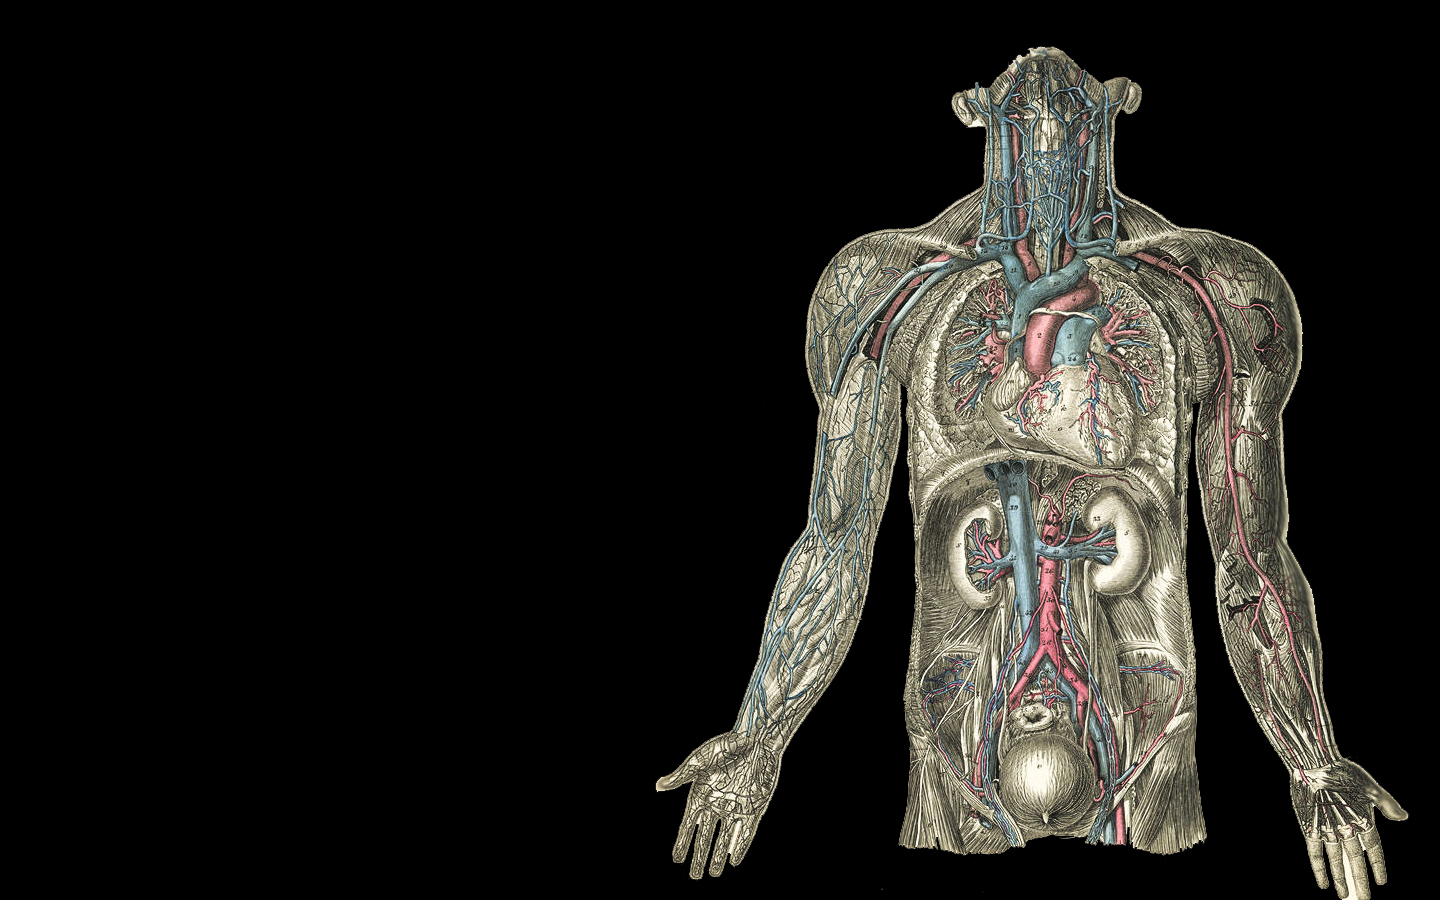 fonds d'écran hd humains,anatomie humaine,modélisation 3d,humain,épaule,corps humain